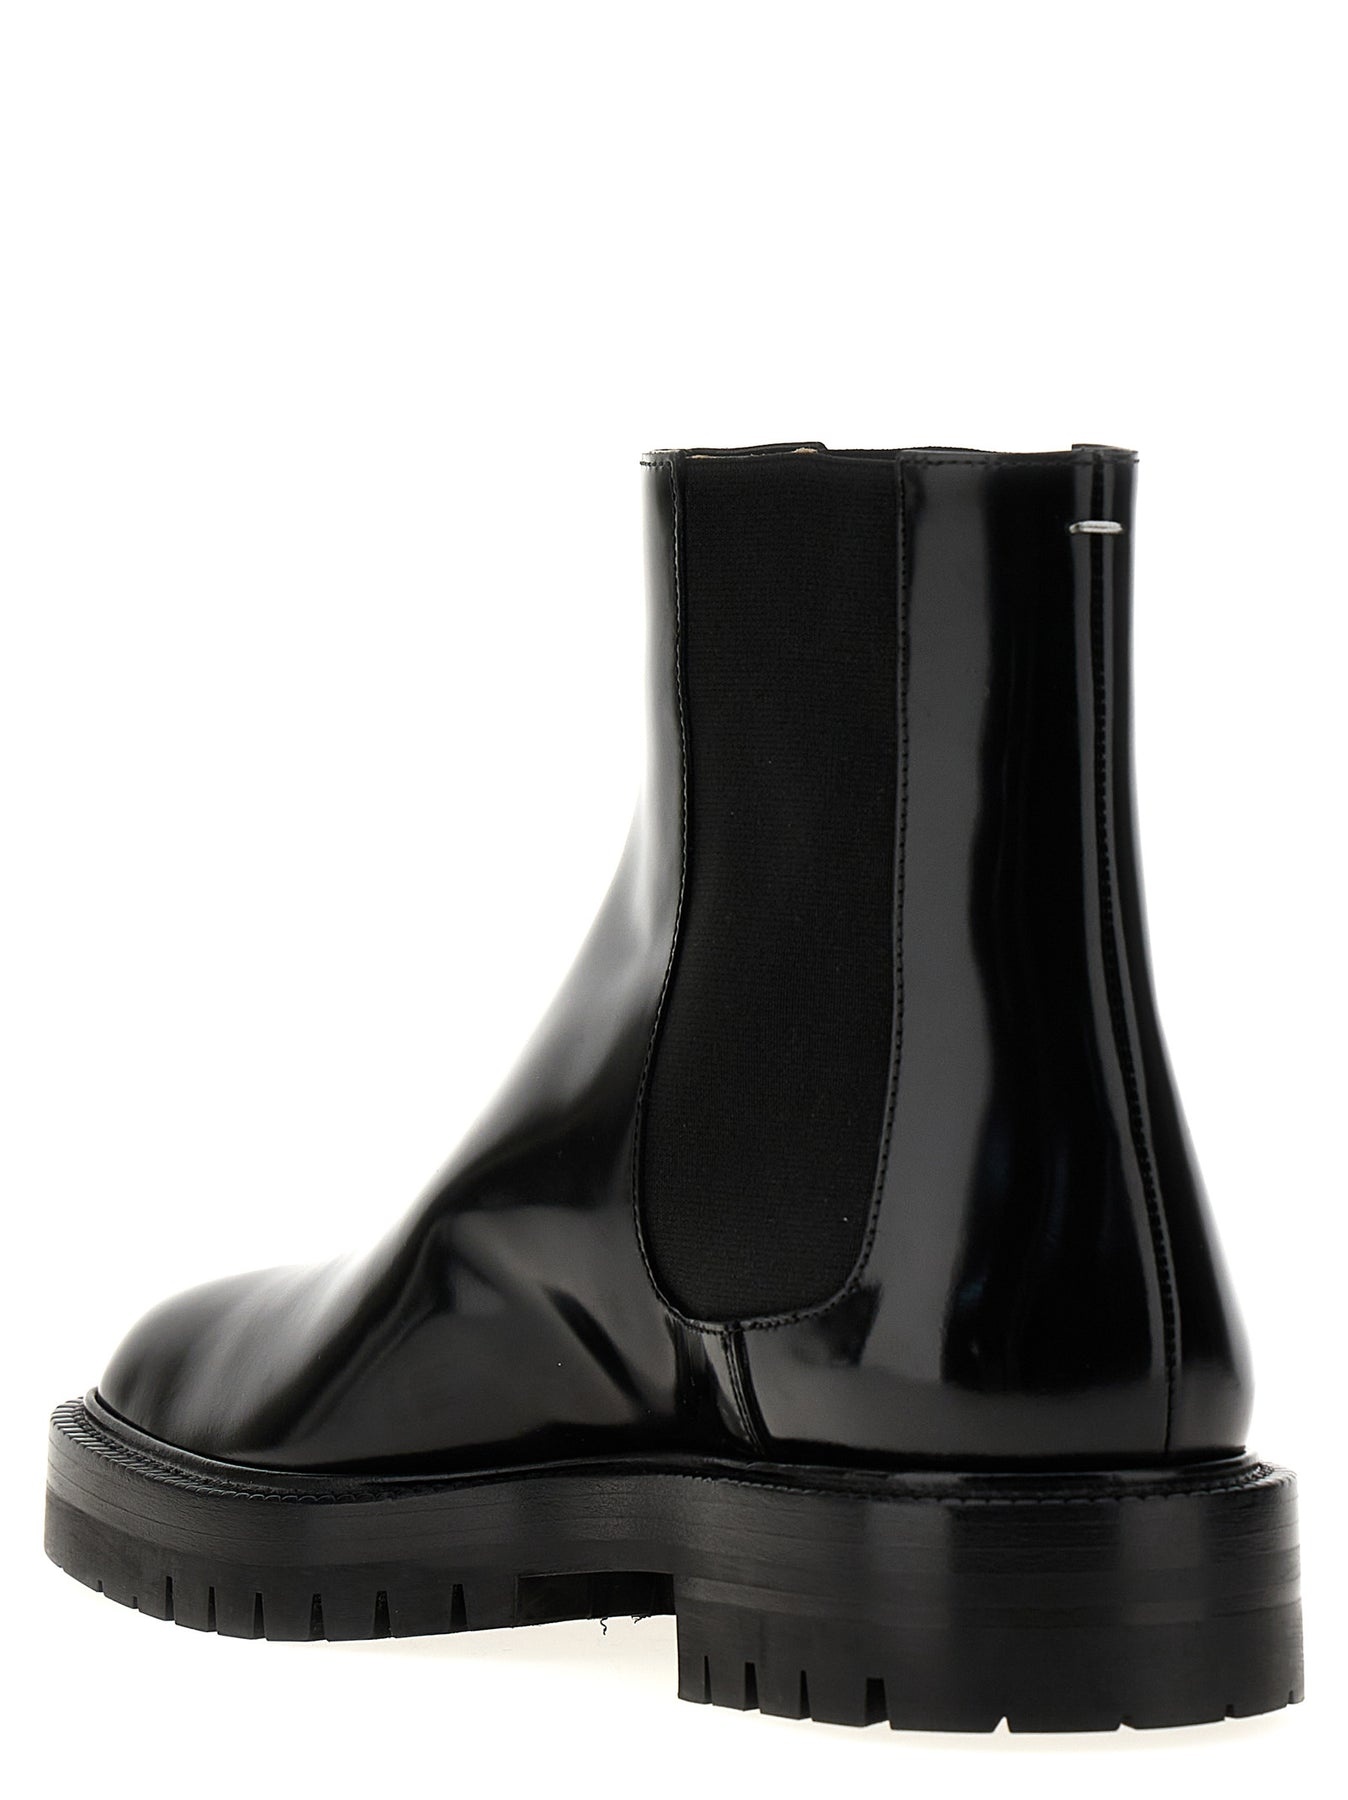 Tabi Flat Shoes Black - 3